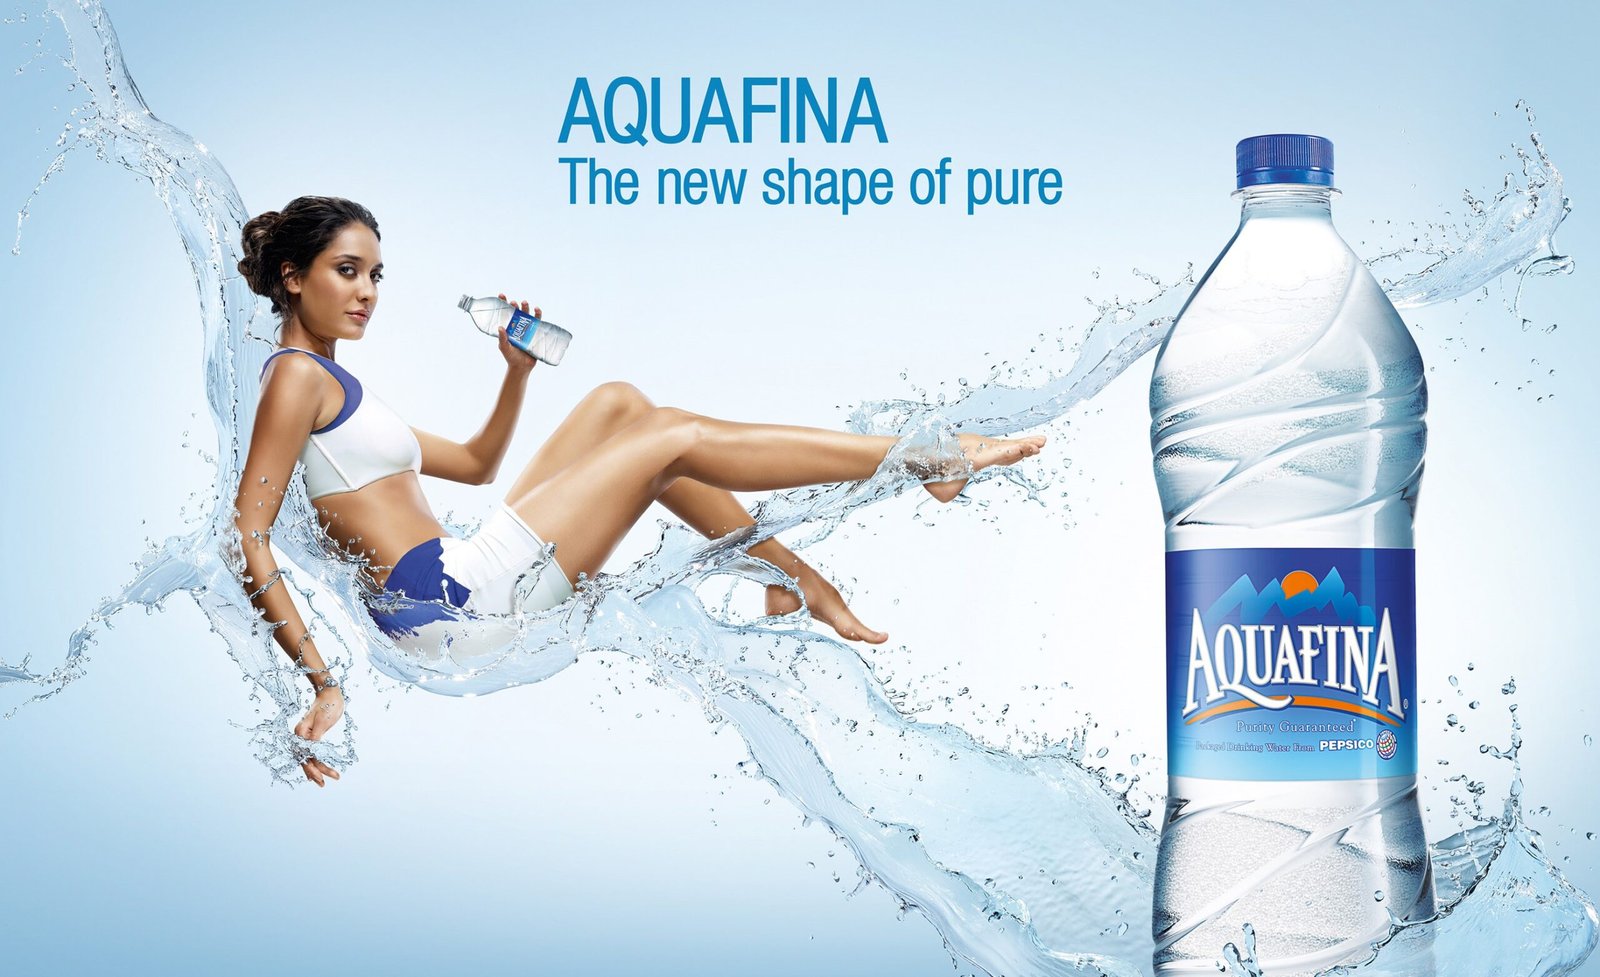 Aquafina Marketing Strategy